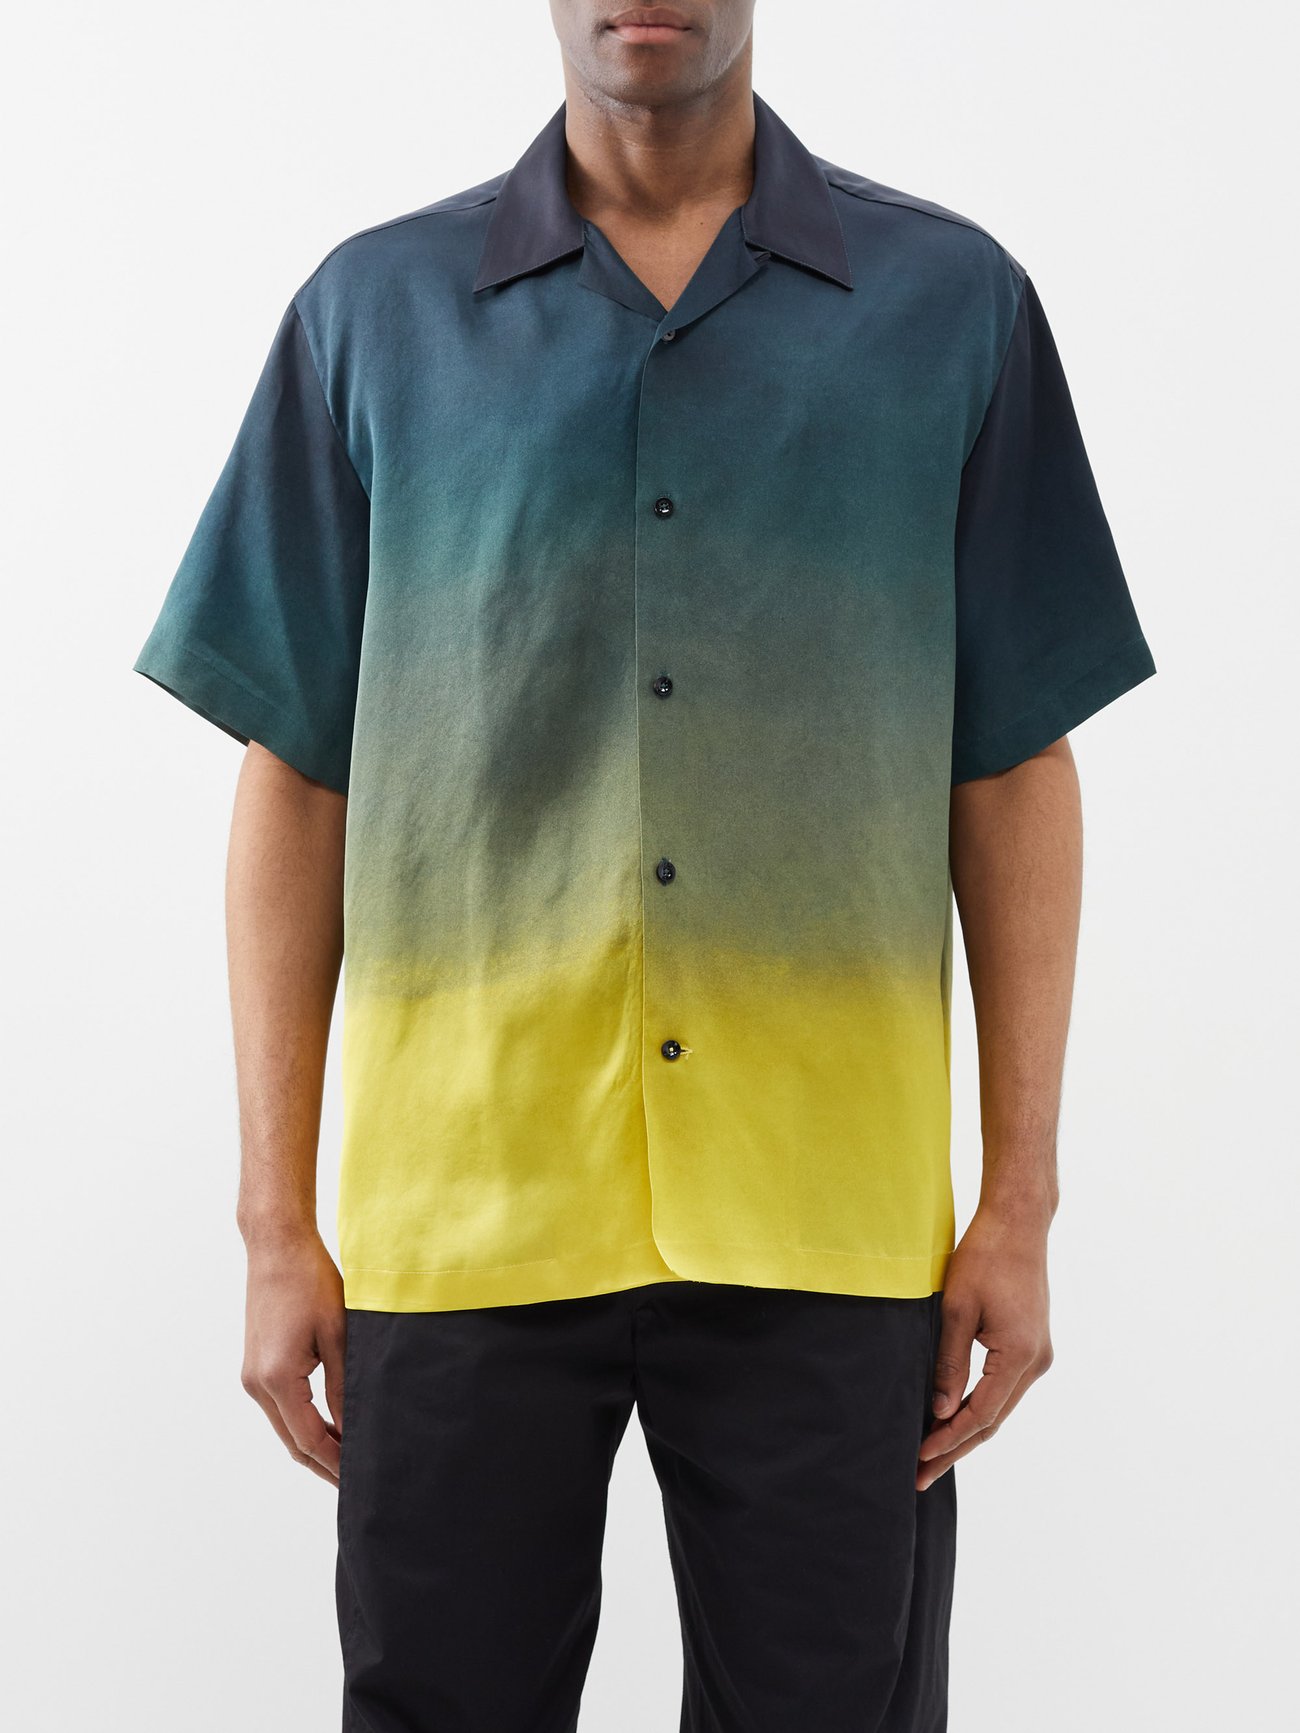 Palm-print ombré shirt video